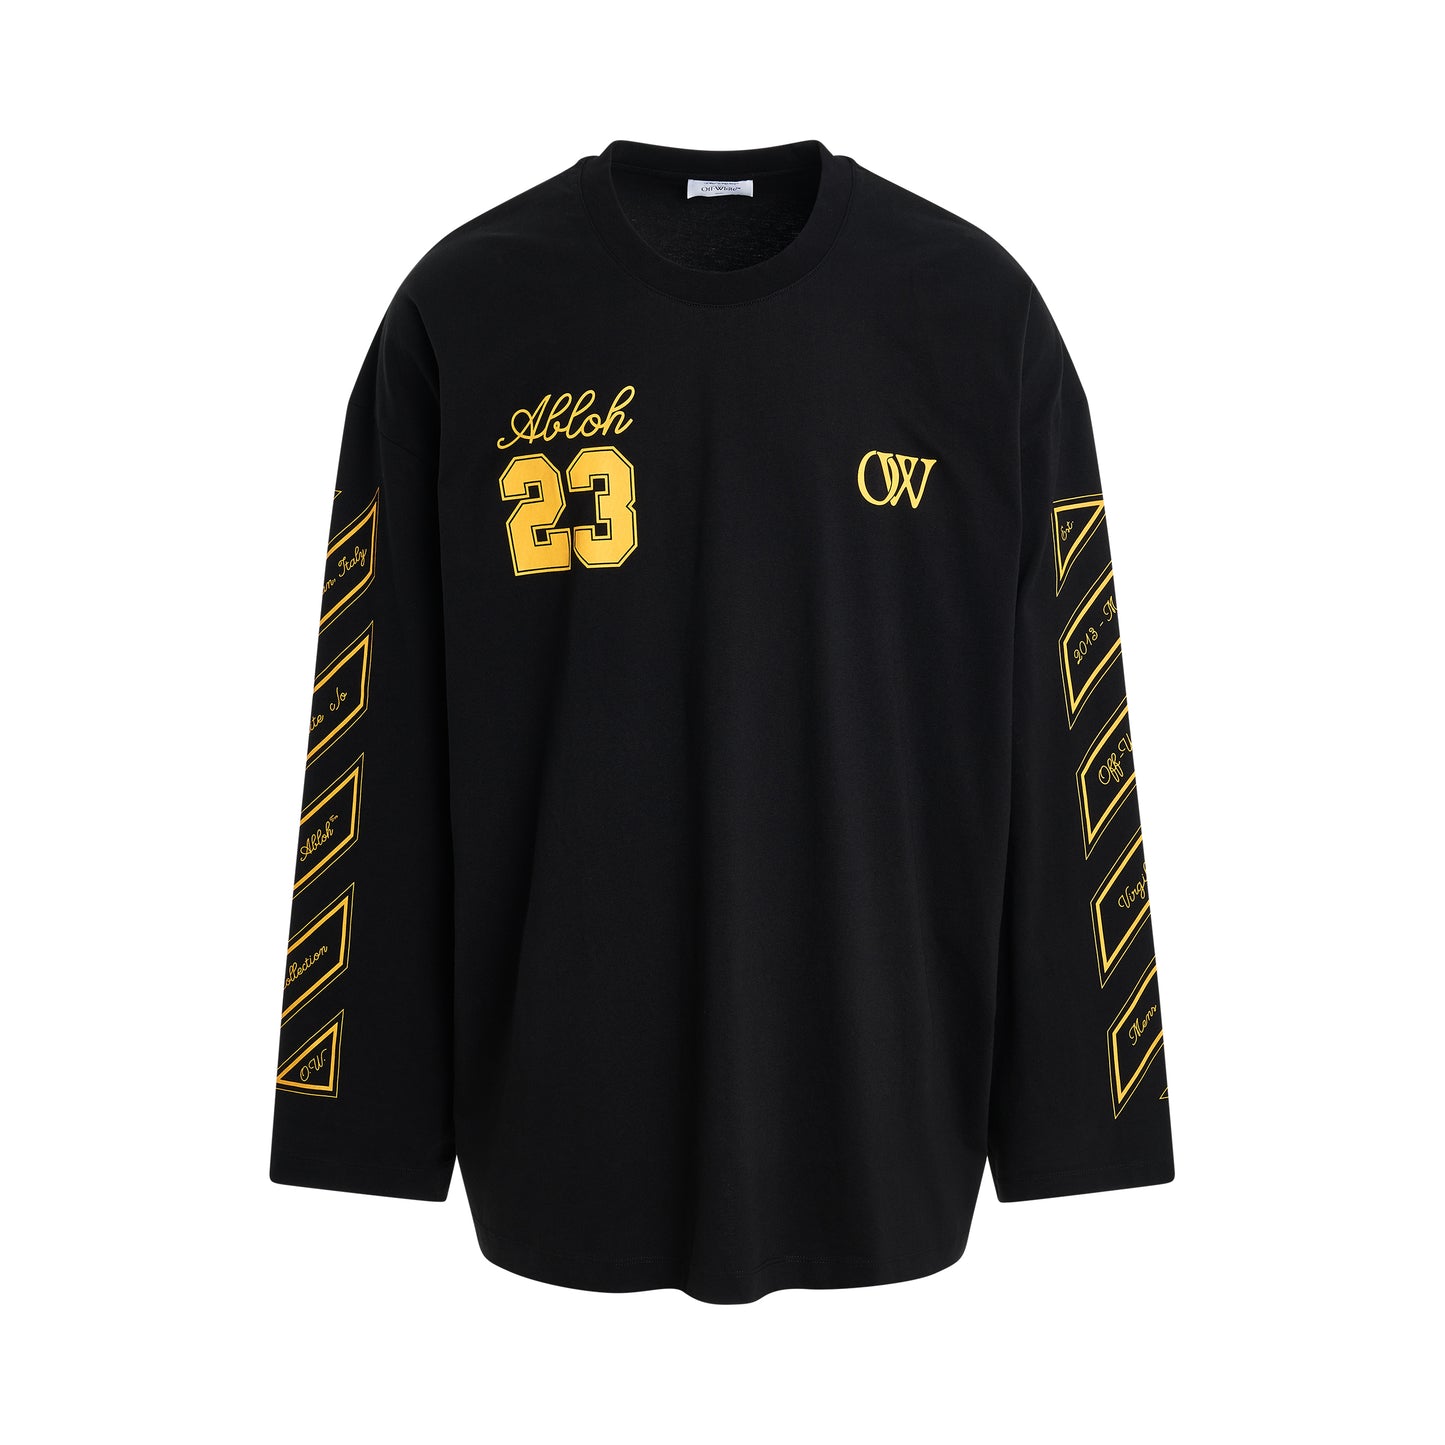 23 Logo Wide Long Sleeve T-Shirt in Black Gold